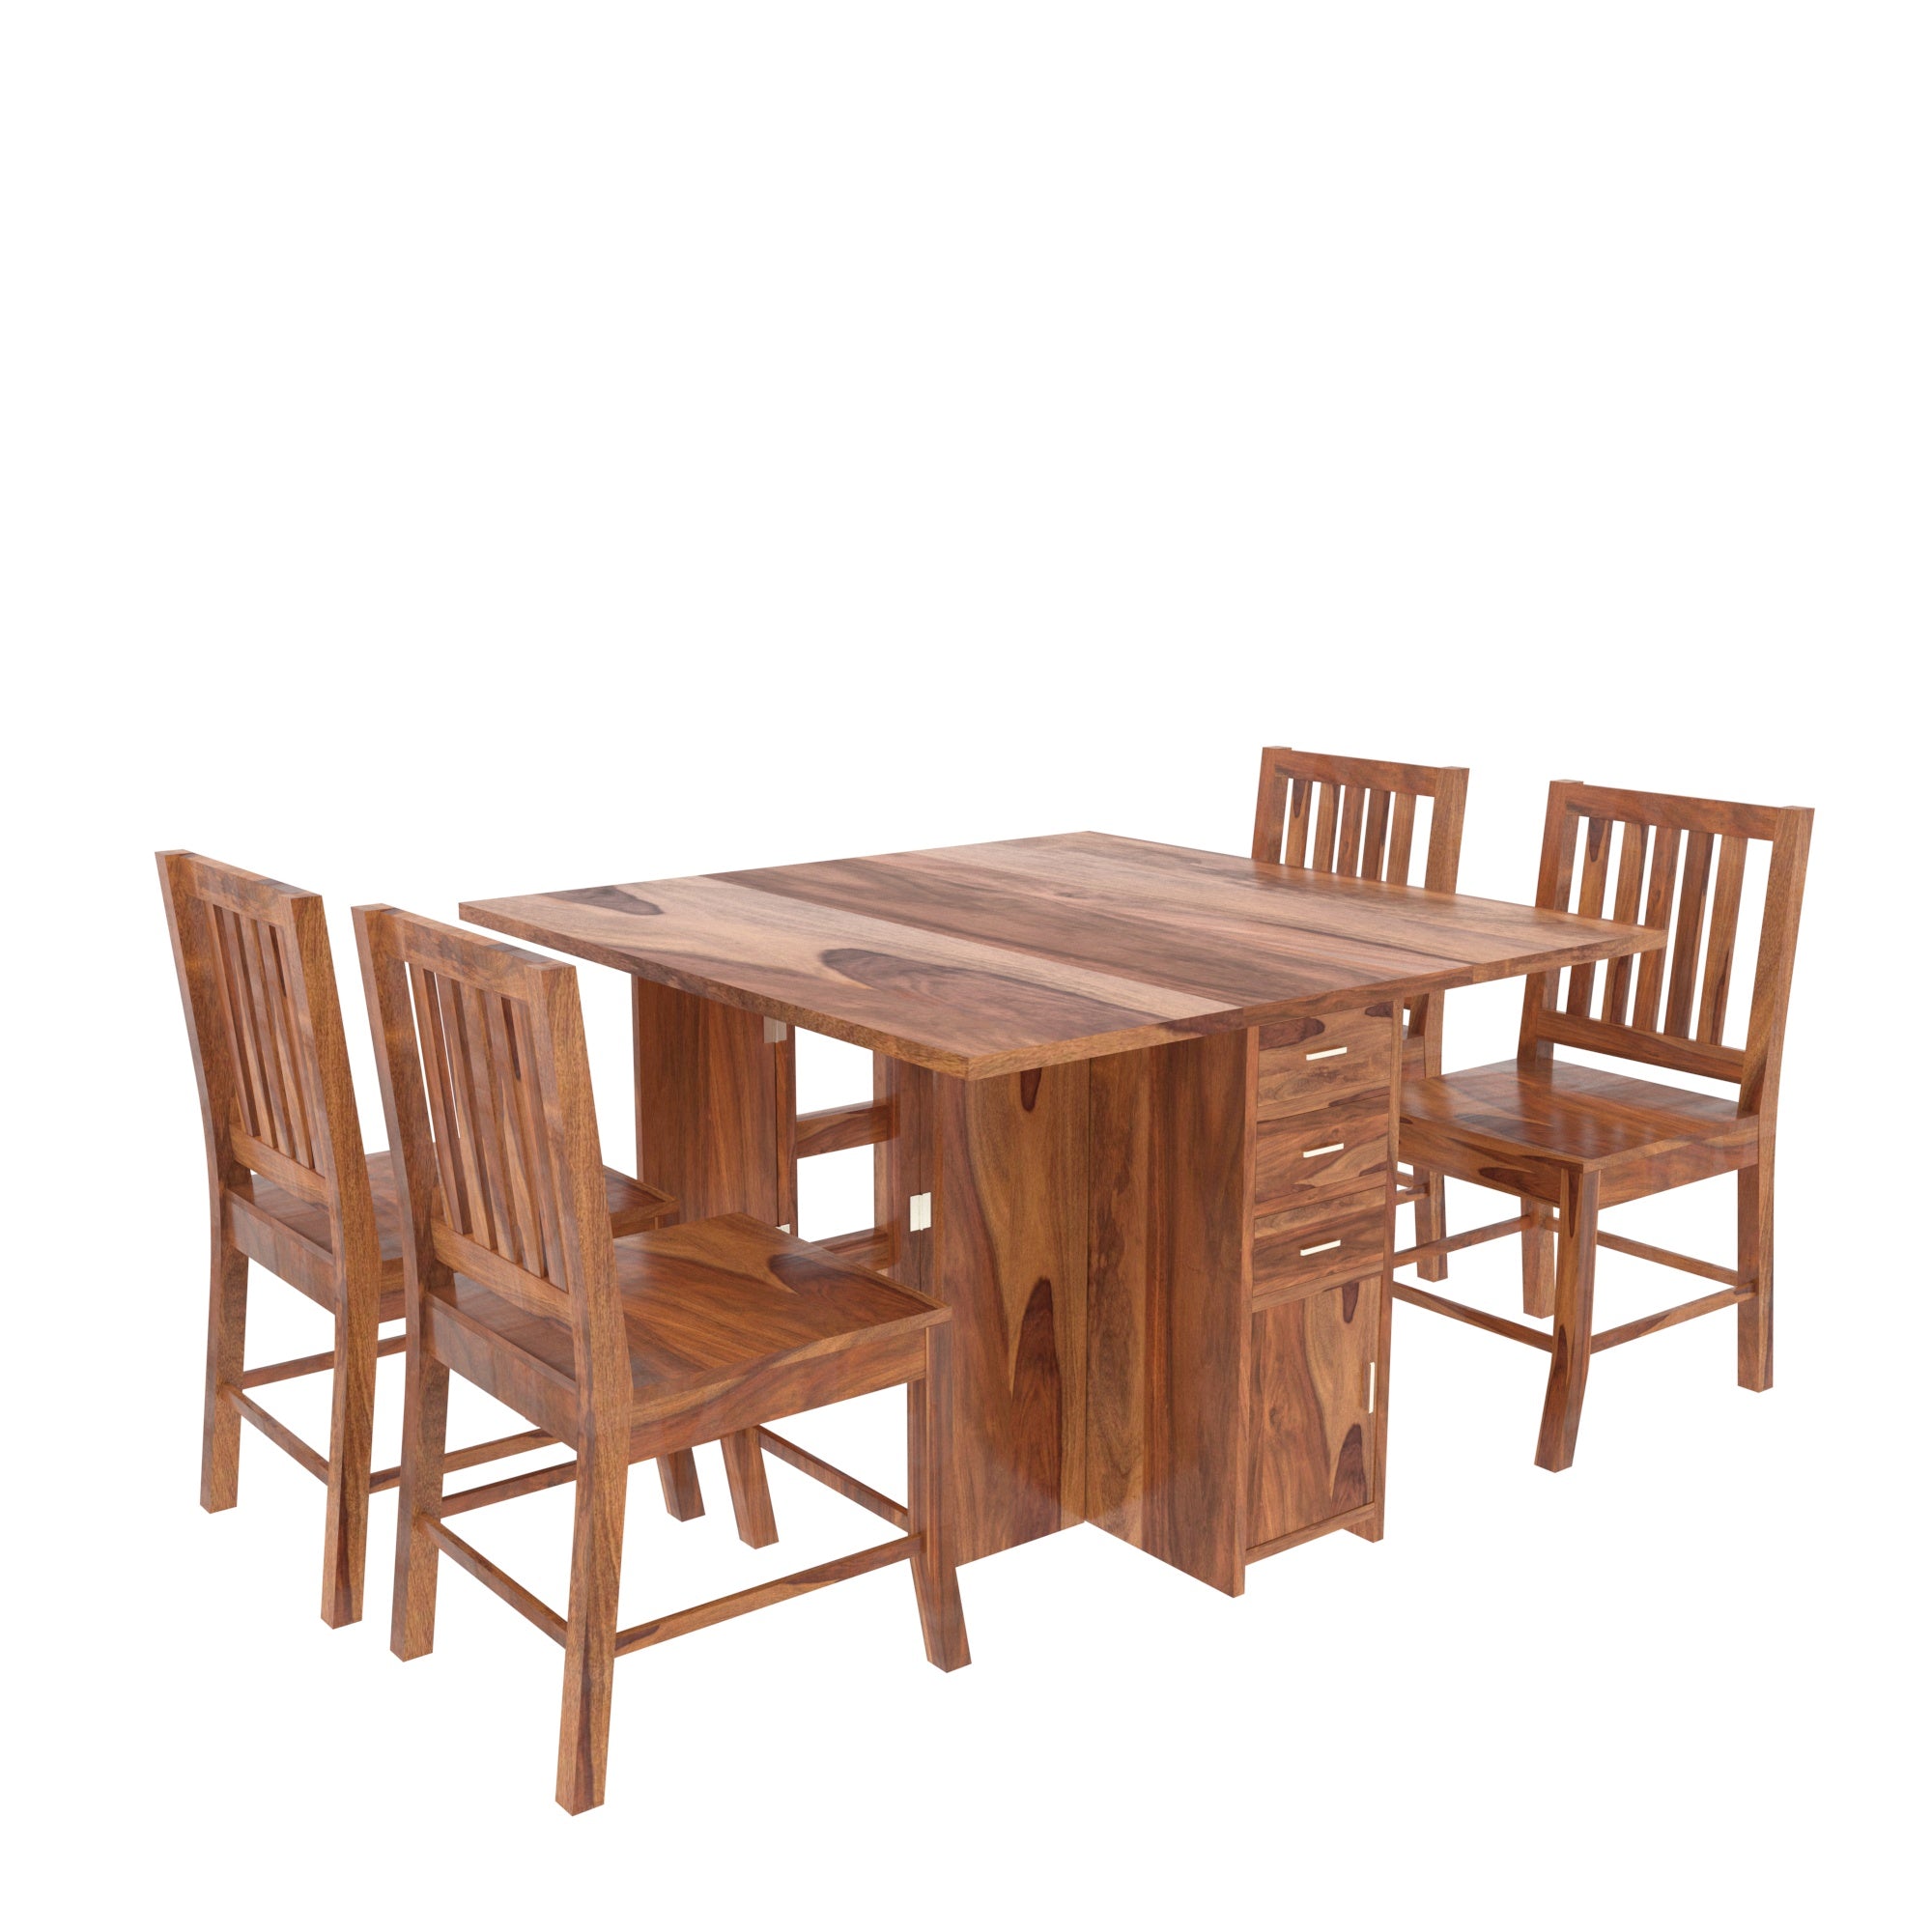 Aesthetic Venture Antique Finished Handmade Wooden Dining Set Dining Set